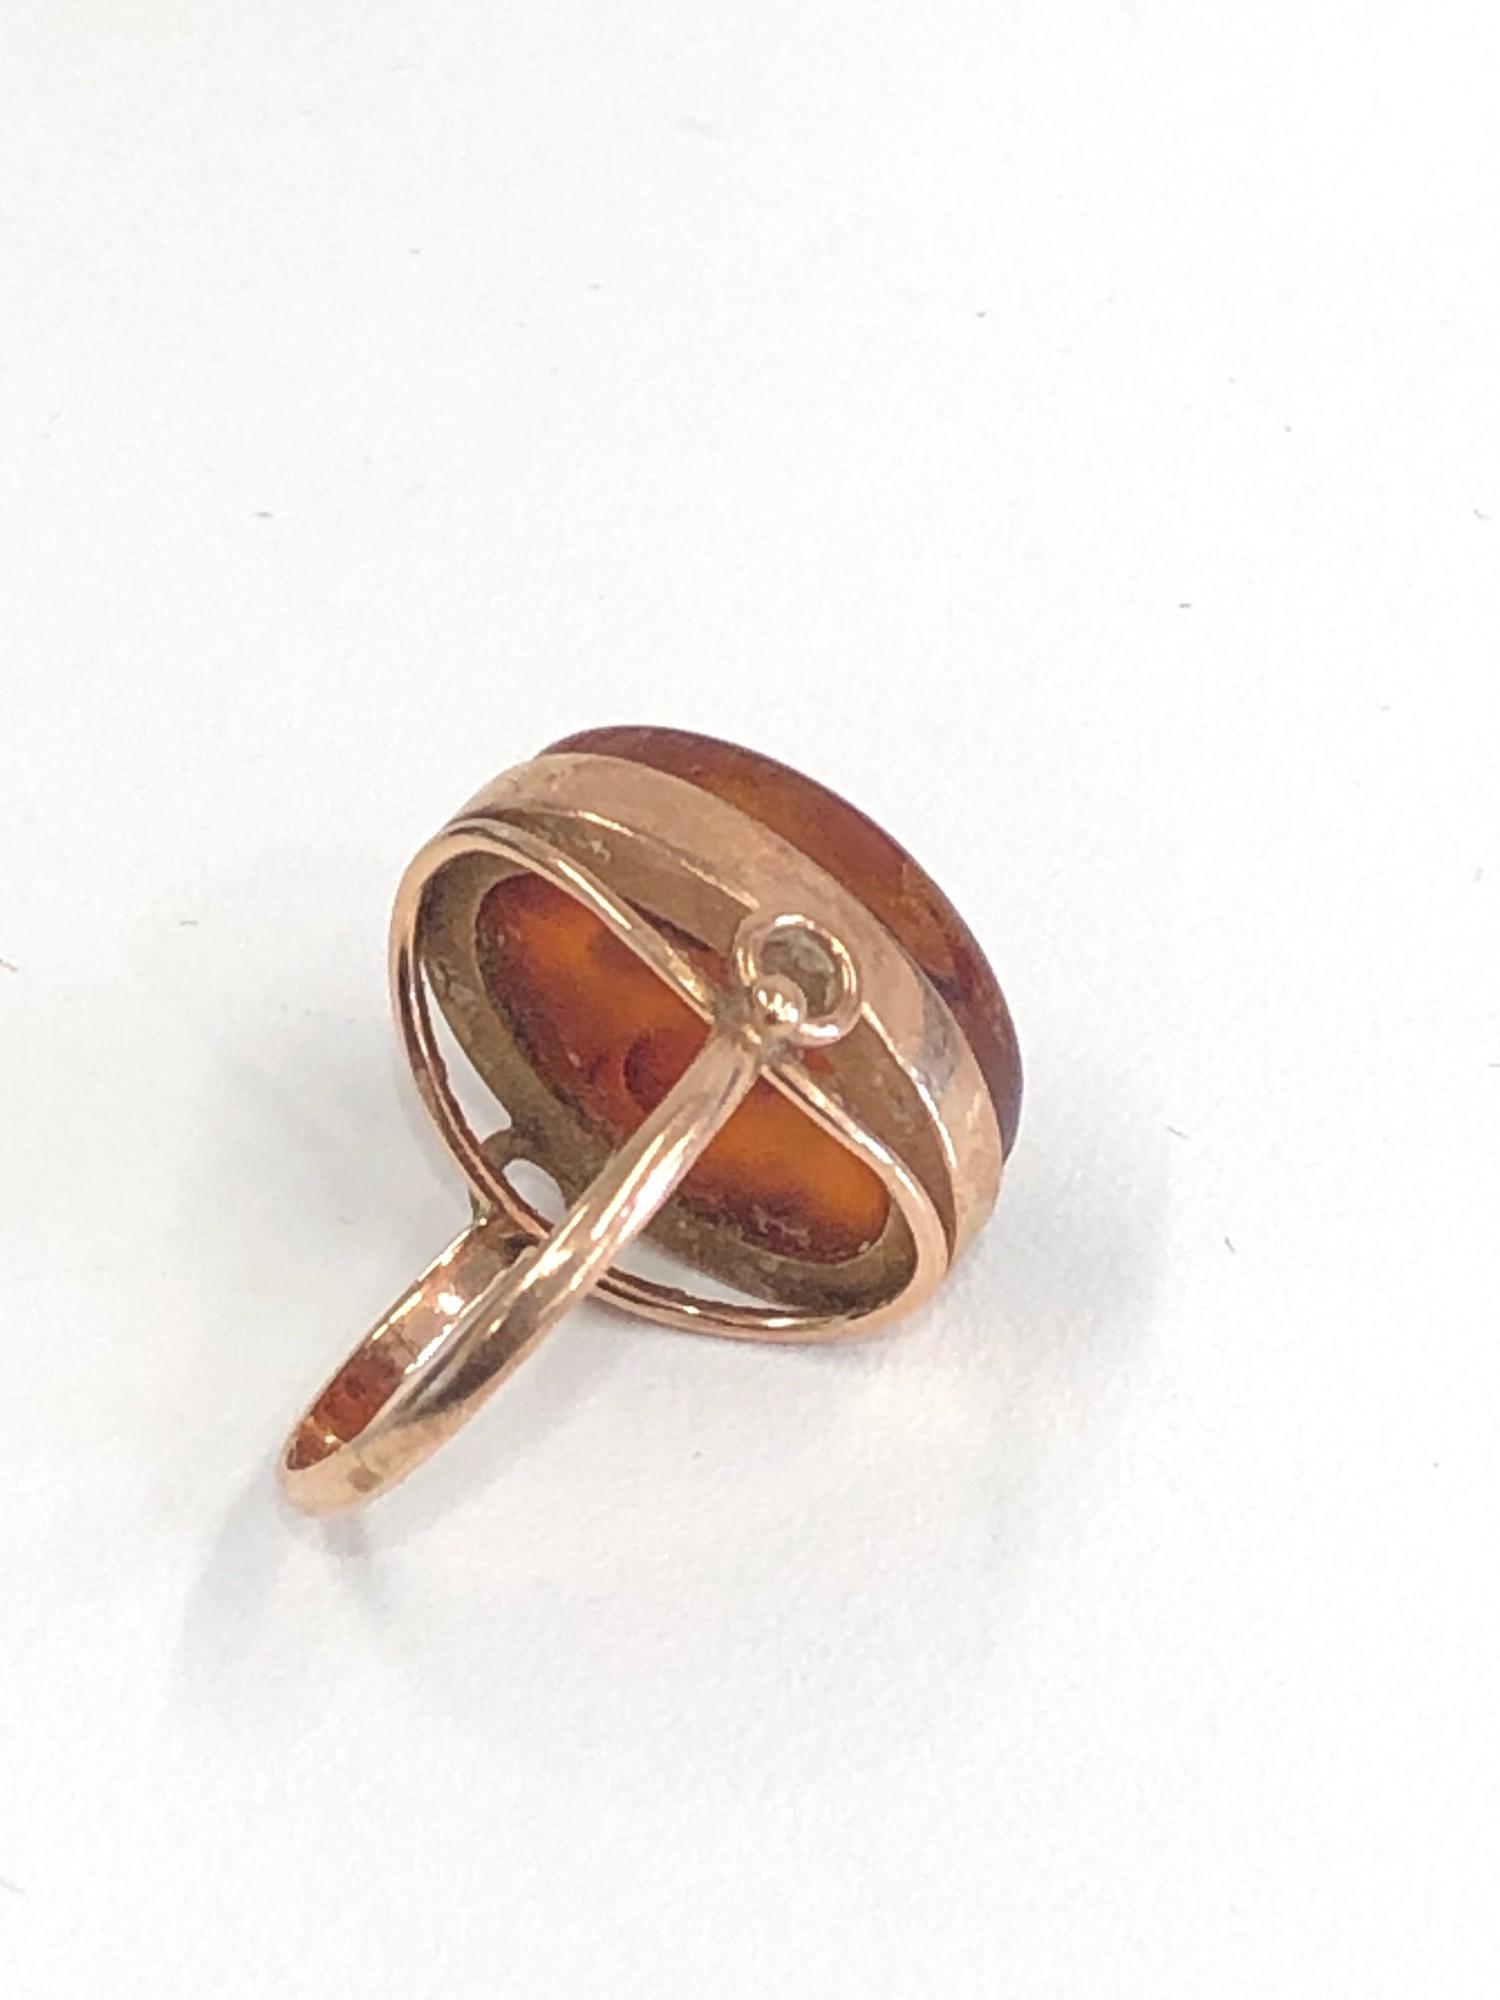 Vintage rose gold amber ring weight 4.3g - Image 3 of 3